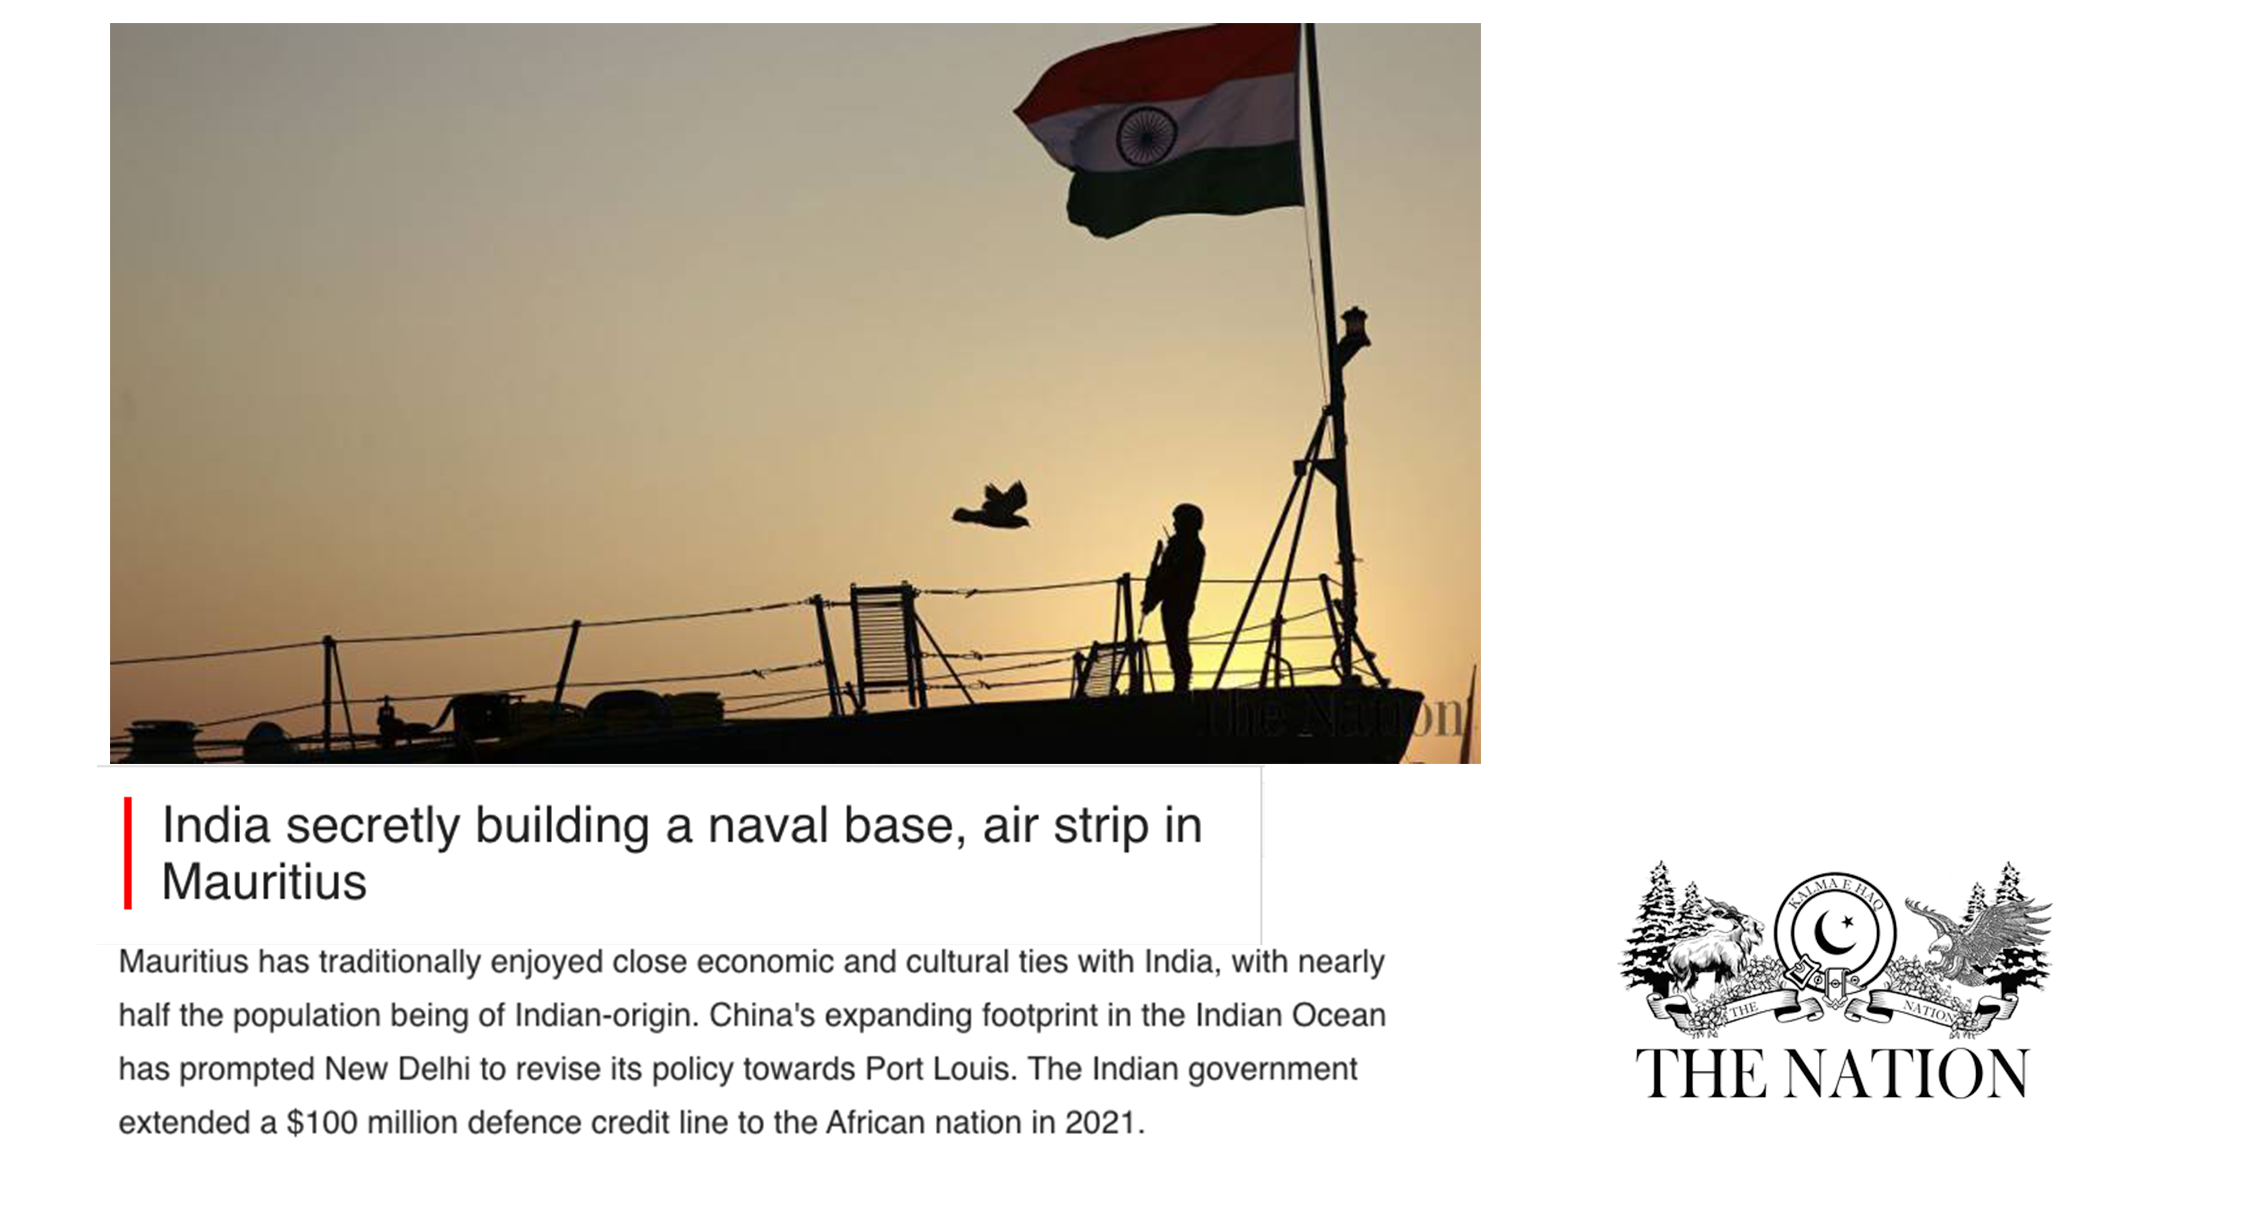 India secretly building a naval base, air strip in Mauritius